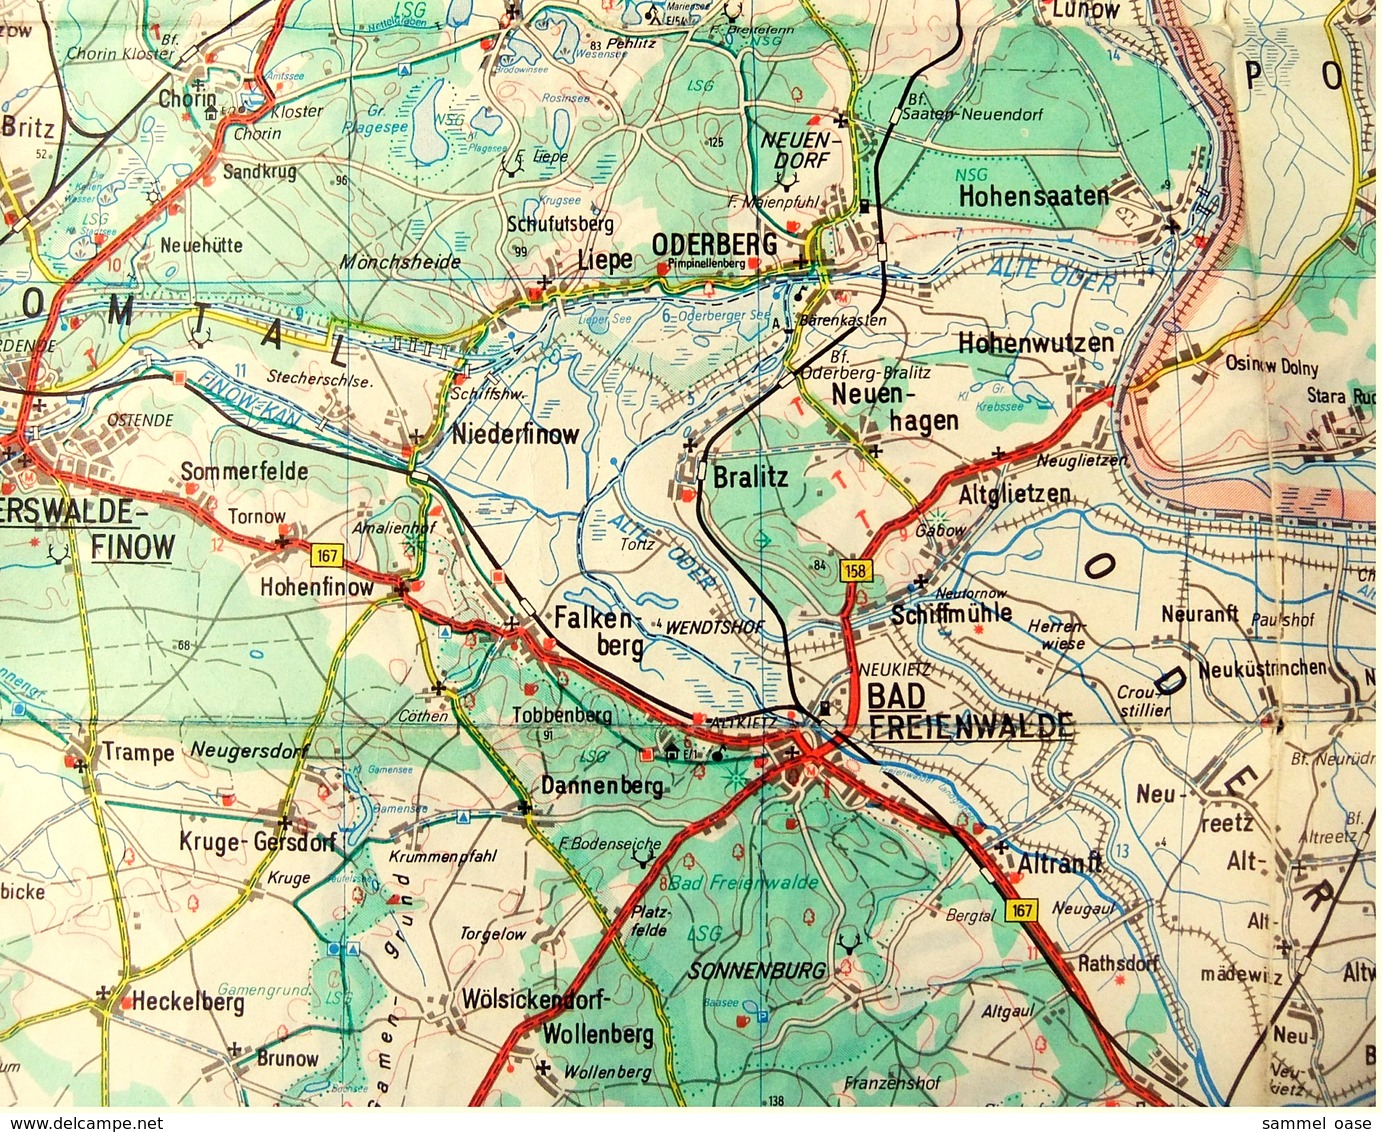 Touristenkarte / Strassenkarte  -  Berlin Nord  -  ca. 96 x 64 cm  -  1:100.000  -  1983